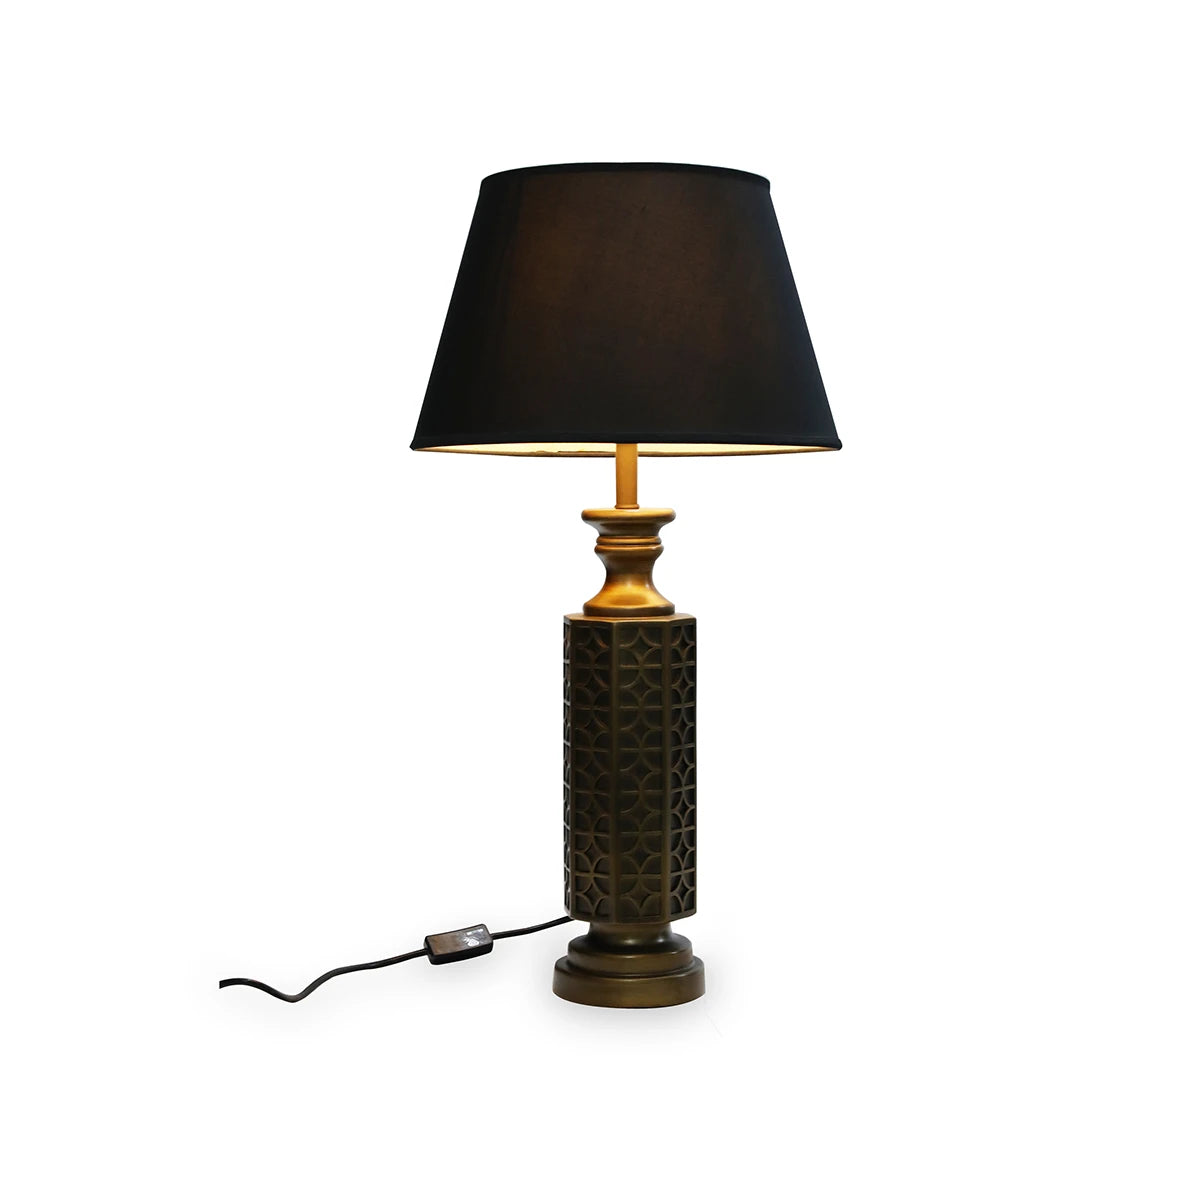 Brass Pillared Modern Desk Lamp Décor with Bulbs On